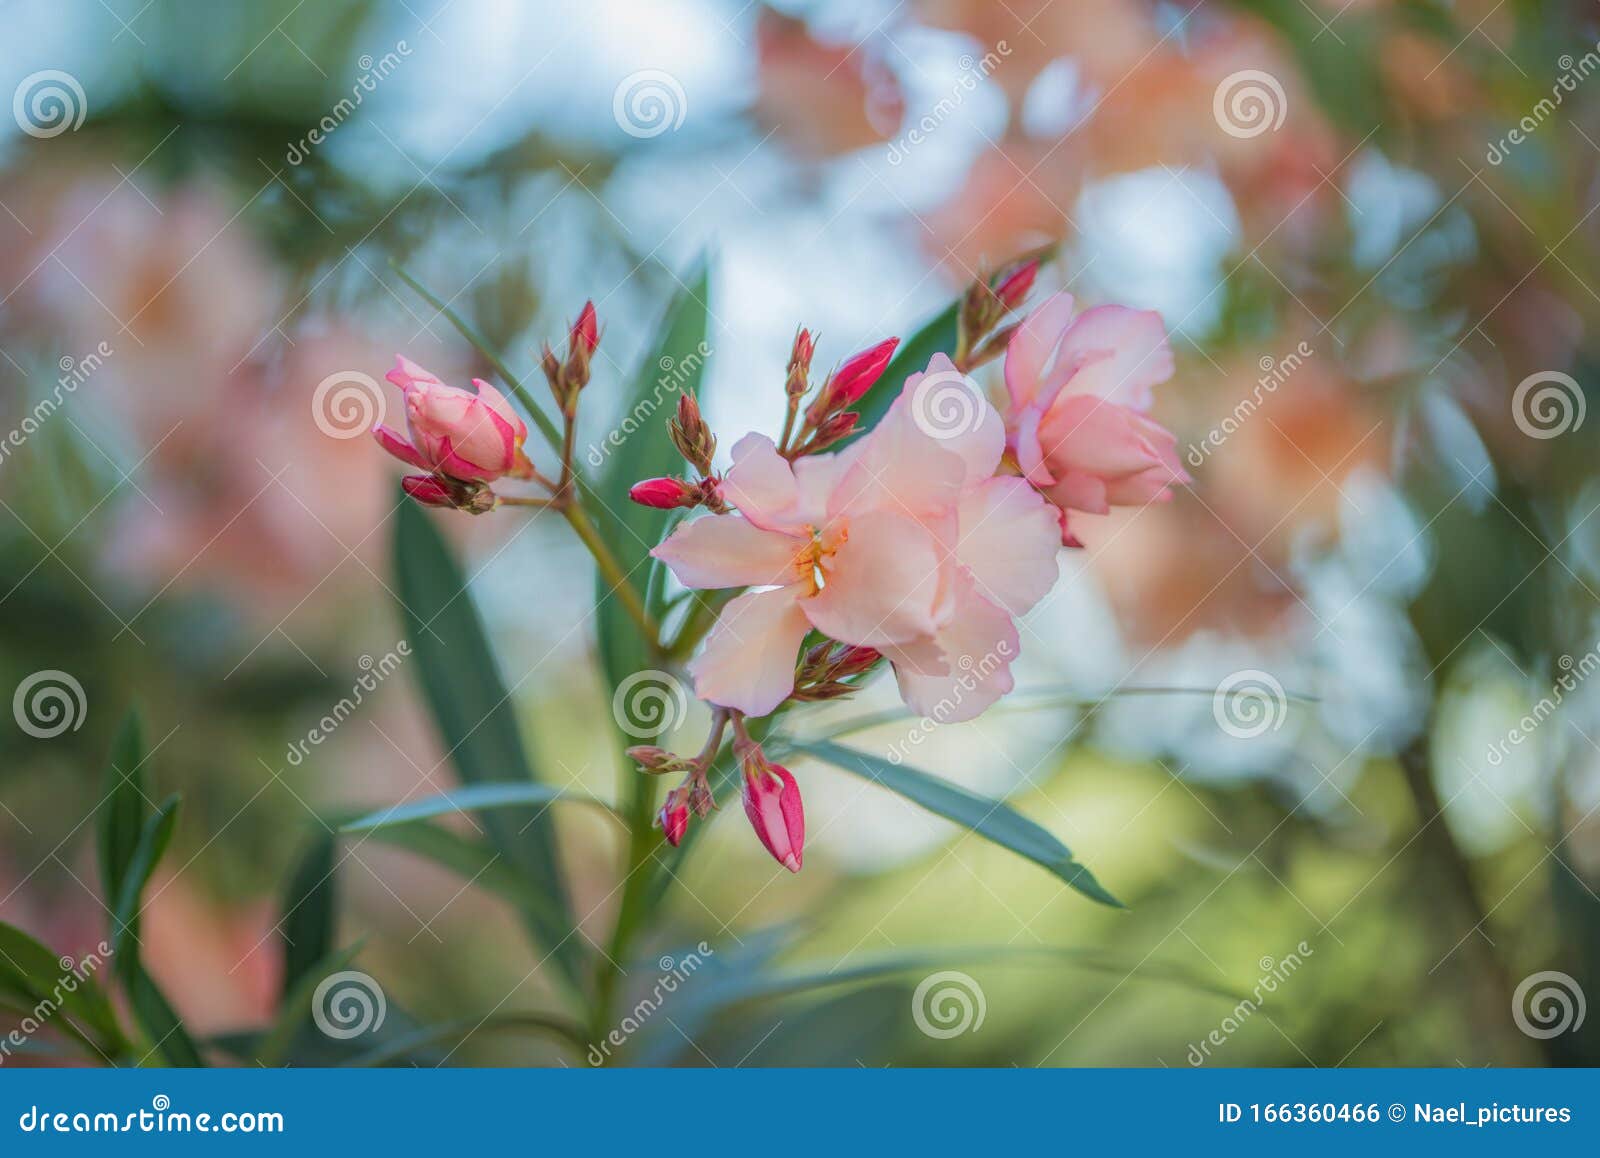 nerium oleander flower and leaves